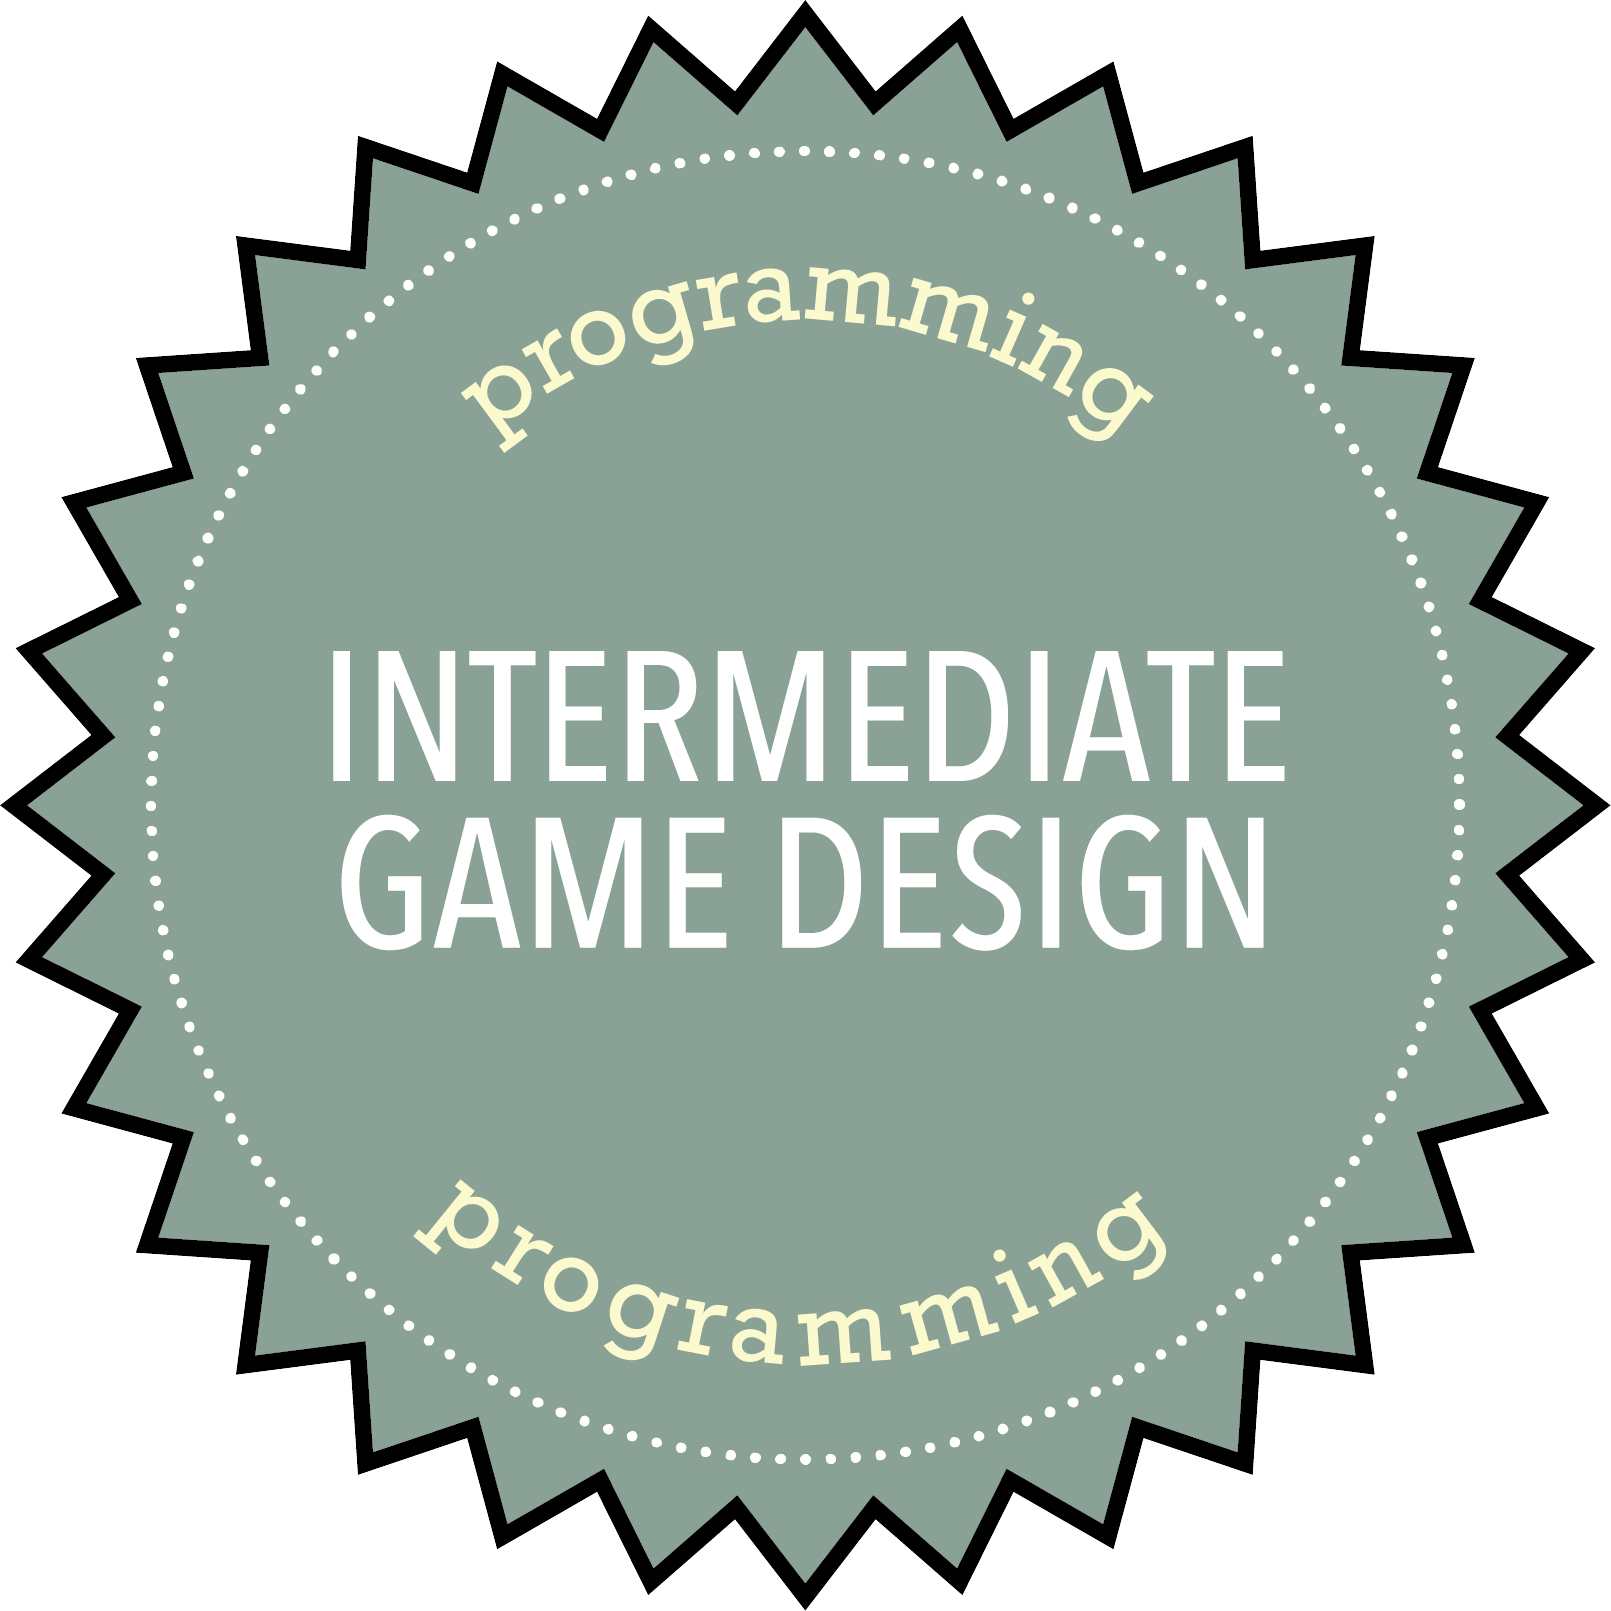 Programming: Intermediate Game Design